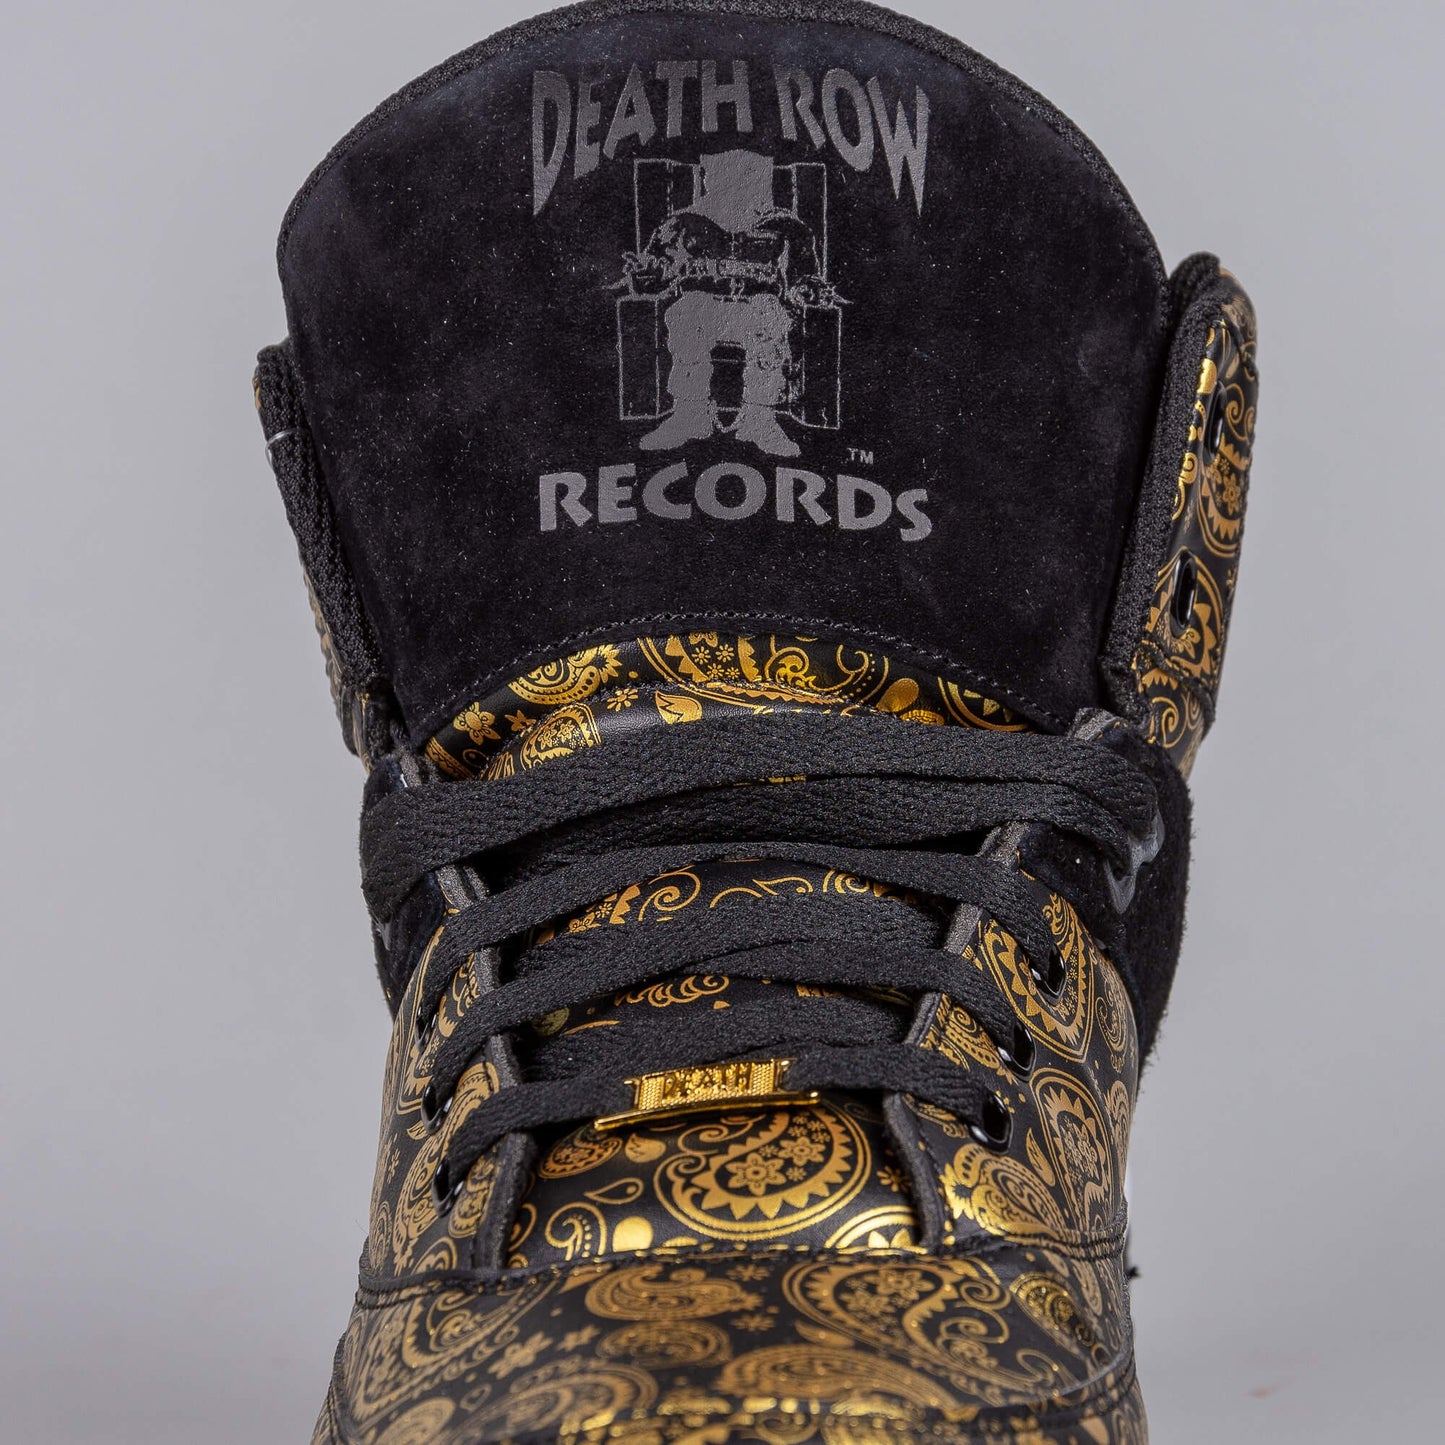 EWING ATHLETICS 33 HI DEATH ROW - BLACK BANDANA/GUM - Death Row Records 30th Anniversary